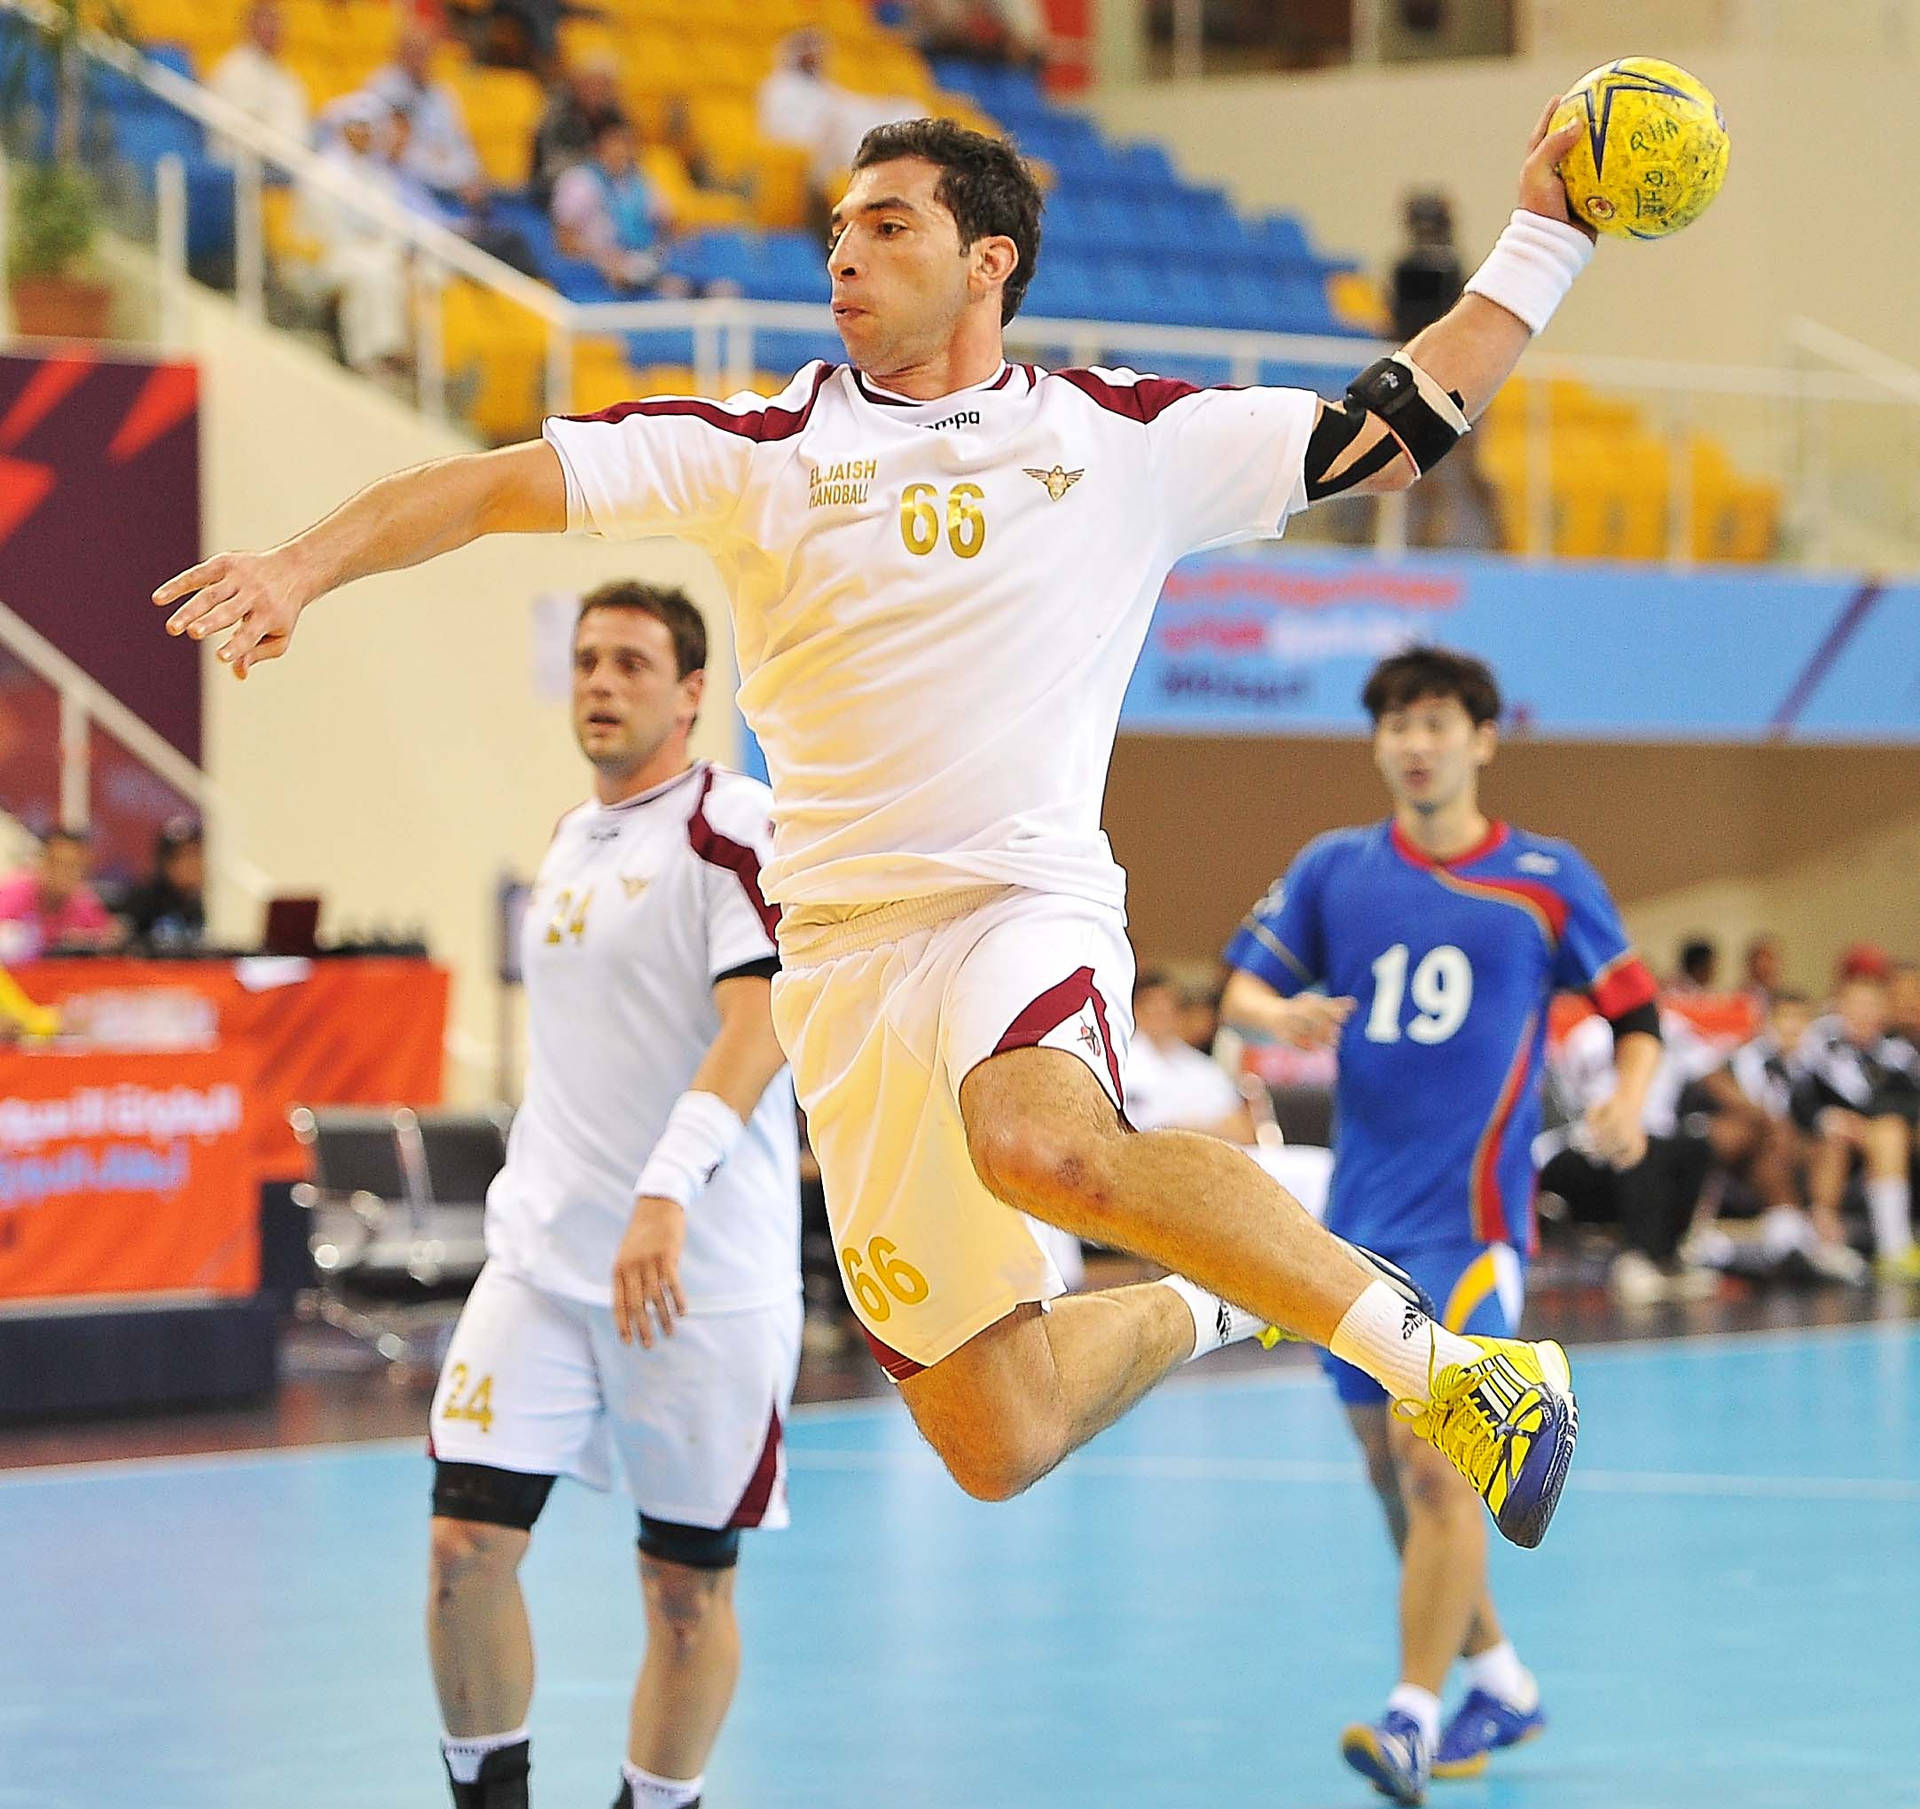 Handball Player Number 66 Wallpaper